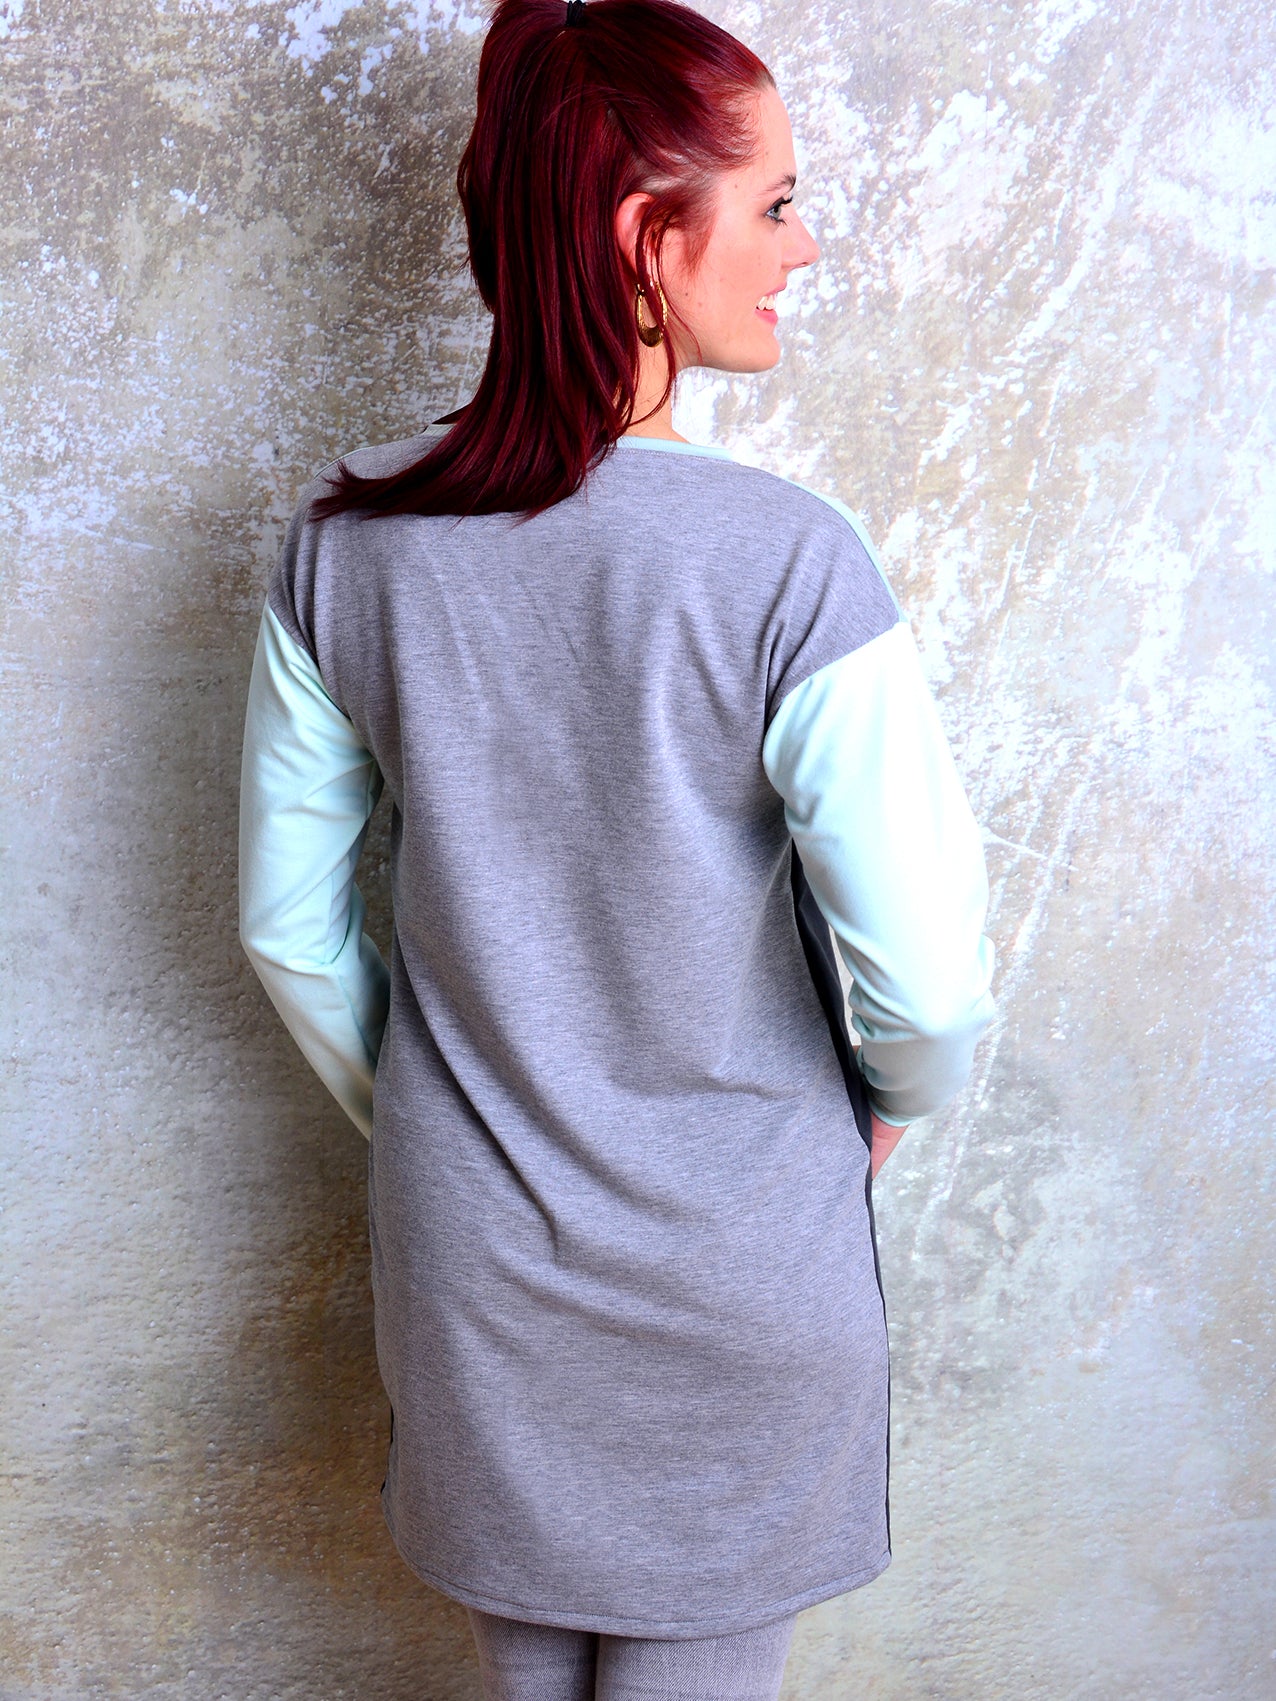 Sweatkleid MELANIE dunkelgrau Colorblocking mintgrün Kleid grau von STADTKIND POTSDAM